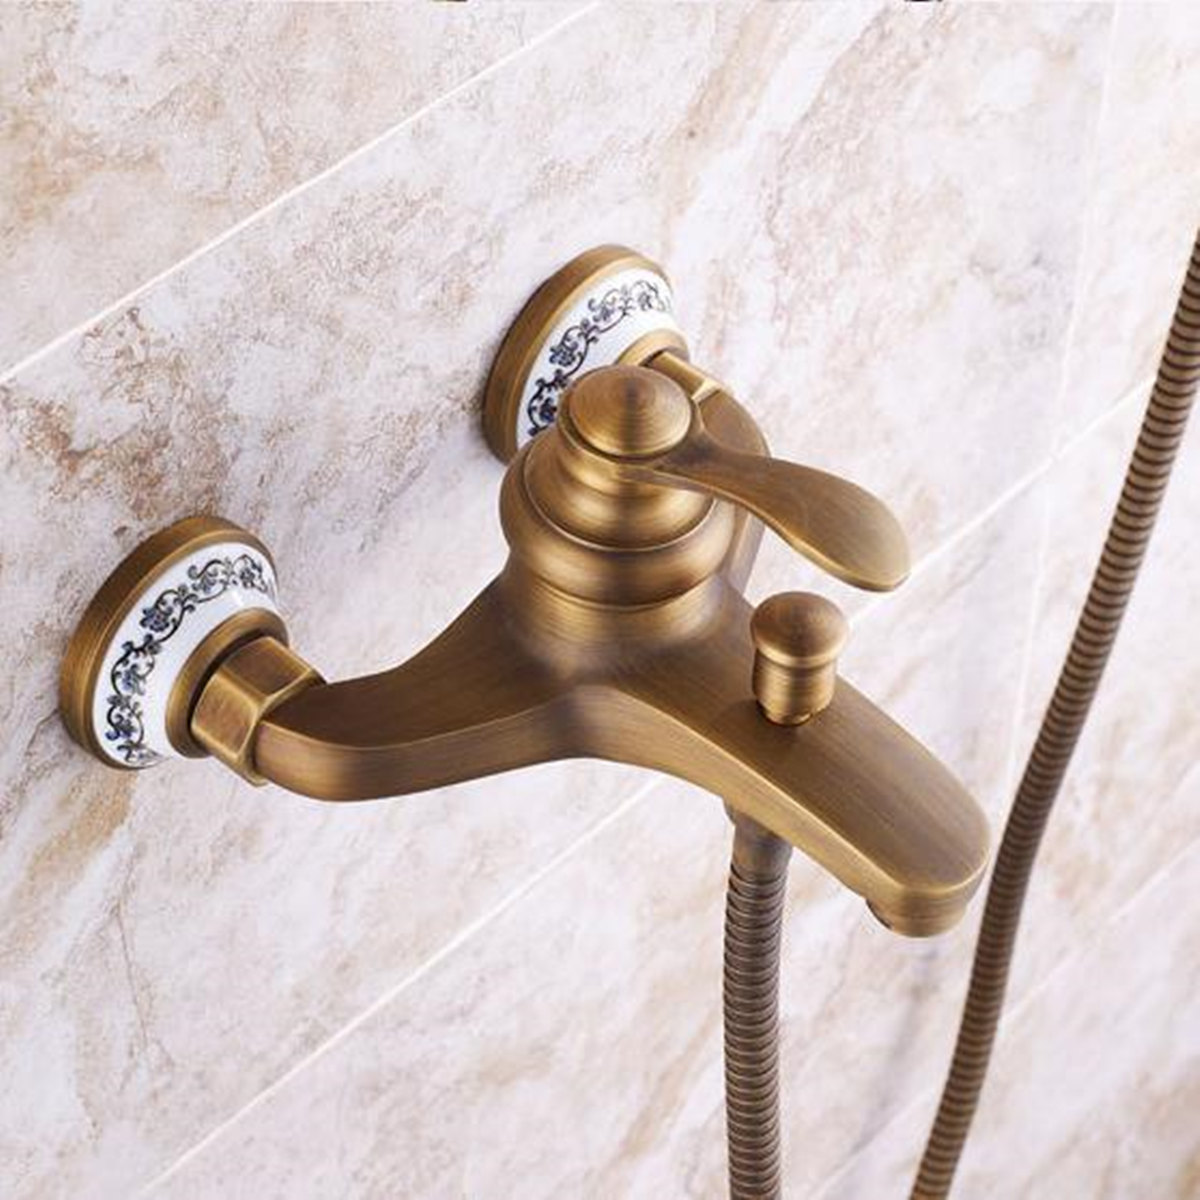 Antique-Brass-Shower-Head-Bathroom-Tub-Faucet-Hand-Held-Tap-Spray-Waterfall-Set-1395971